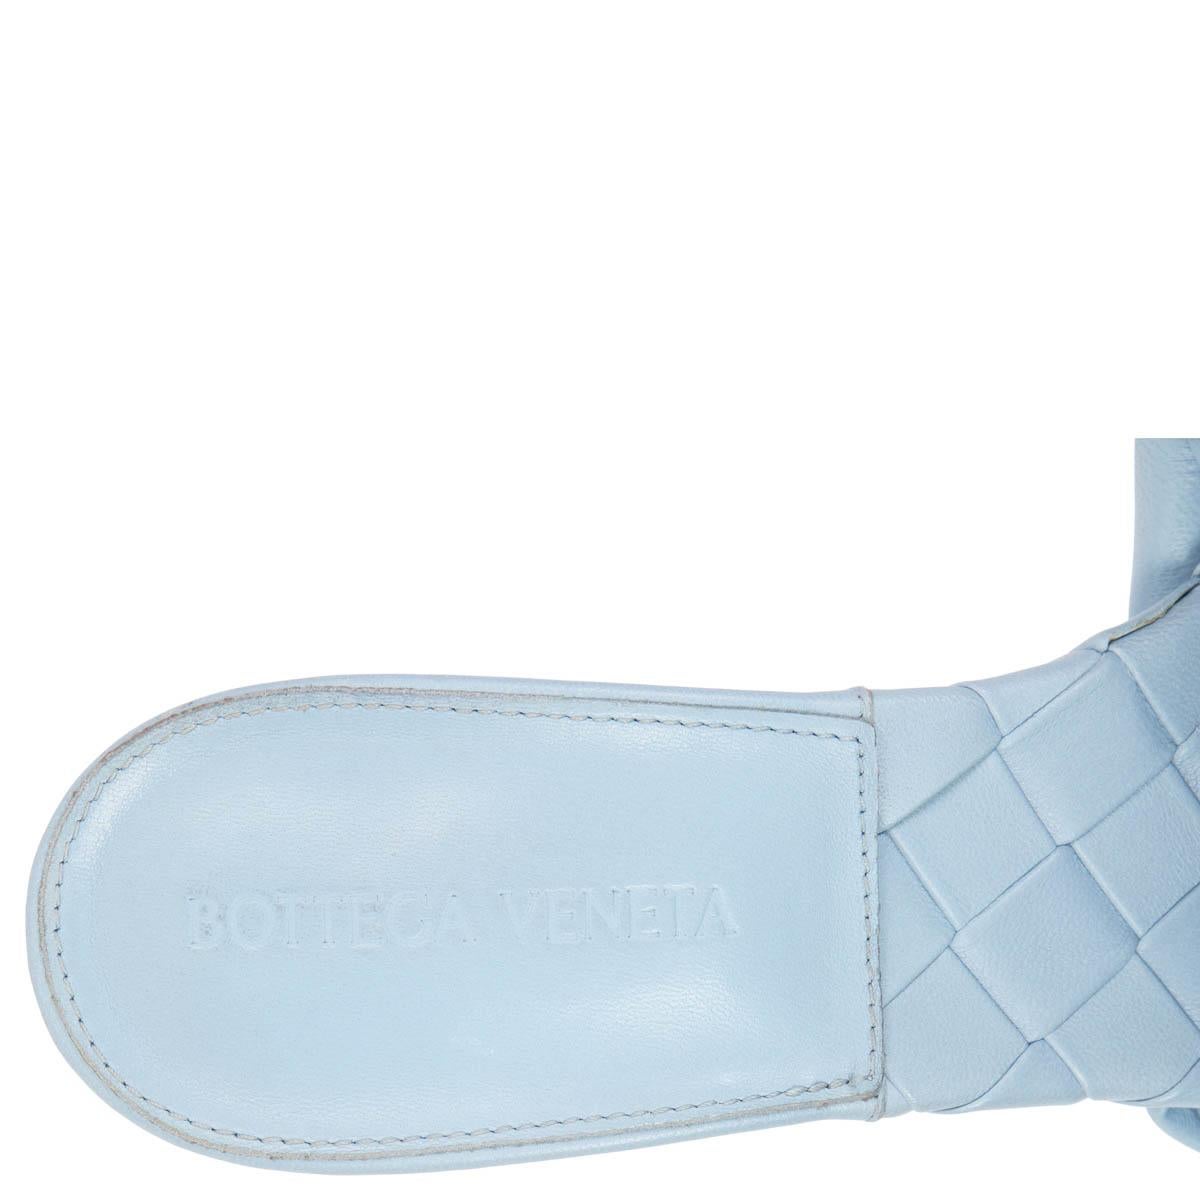 Blue BOTTEGA VENETA Ice blue leather LIDO INTRECCIATO Mules Sandals Shoes 37